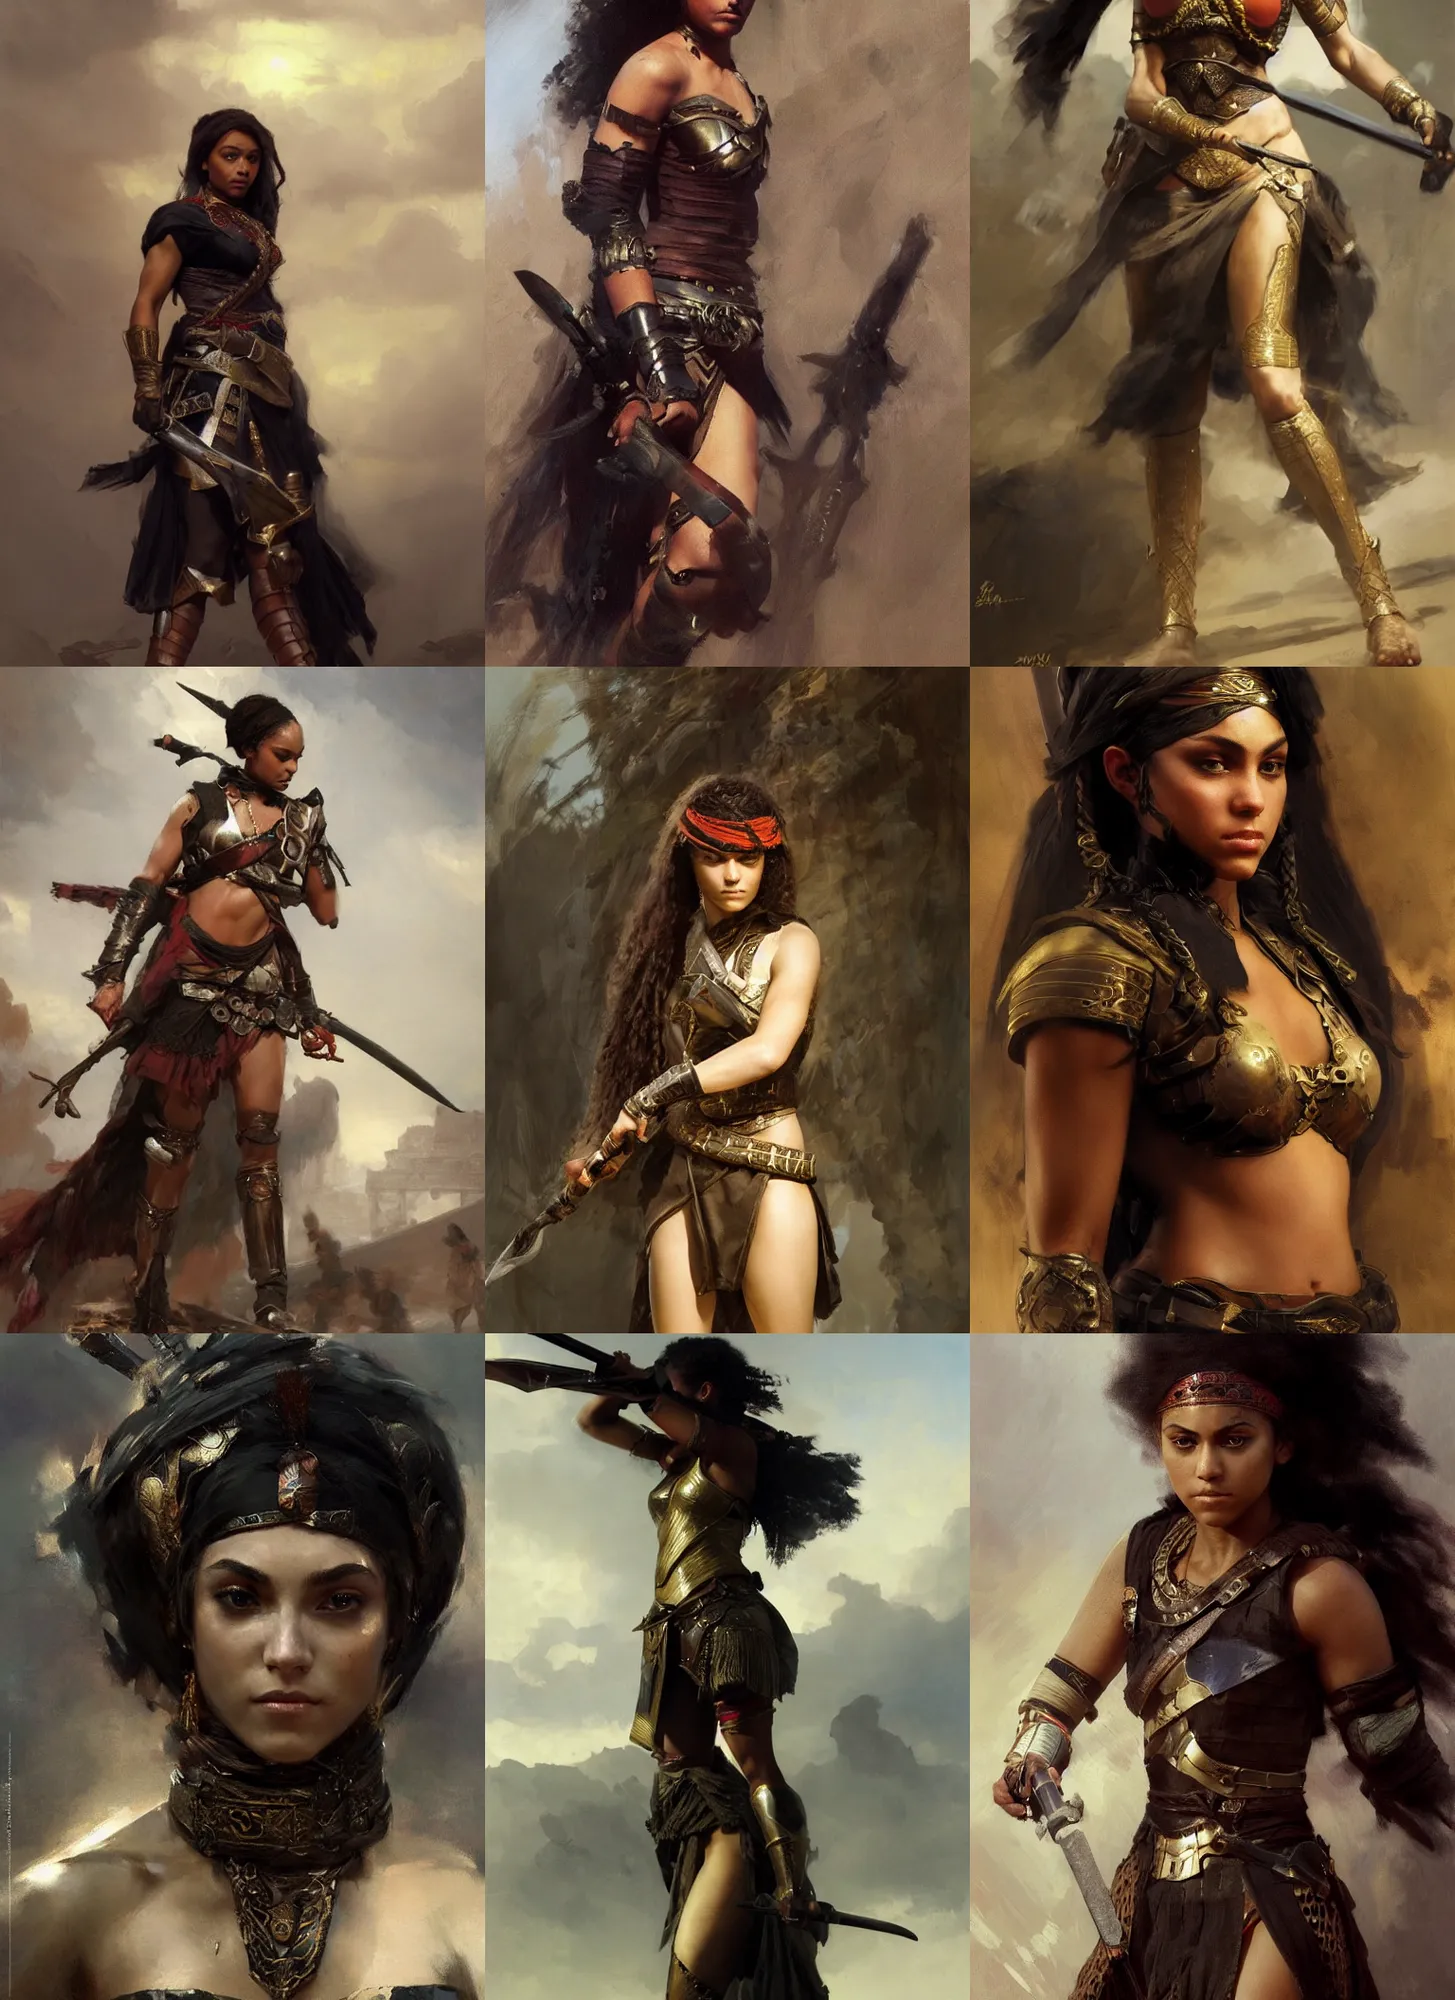 Prompt: black annasophia robb as ancient libyan female warrior, intricate, elegant, highly detailed, artstation, concept art, sharp focus, ruan jia, jurgens, orientalism, bouguereau